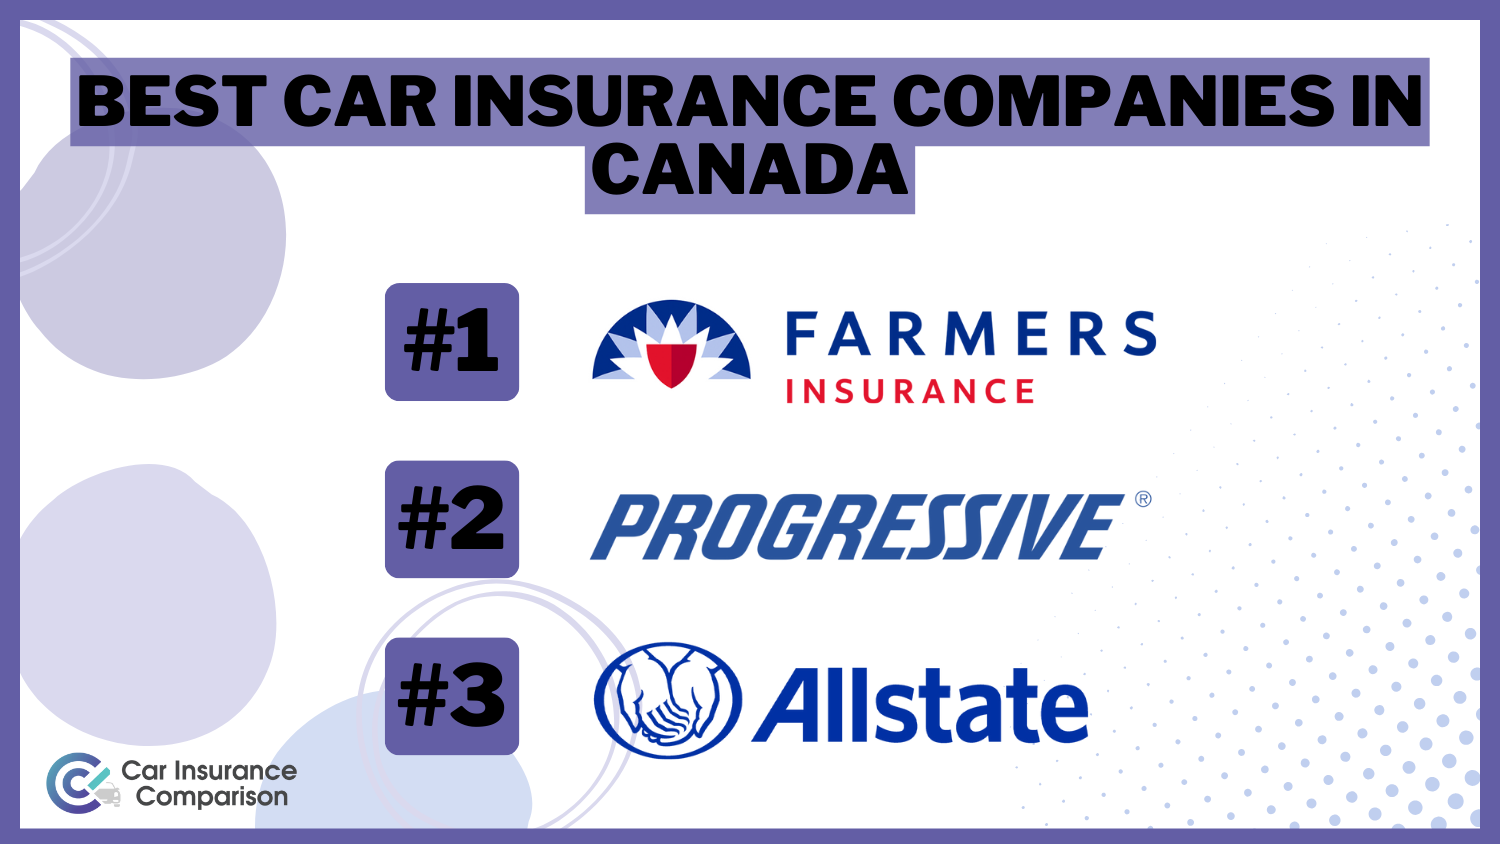 Best Car Insurance Companies in Canada: Farmers, Progressive, and Allstate